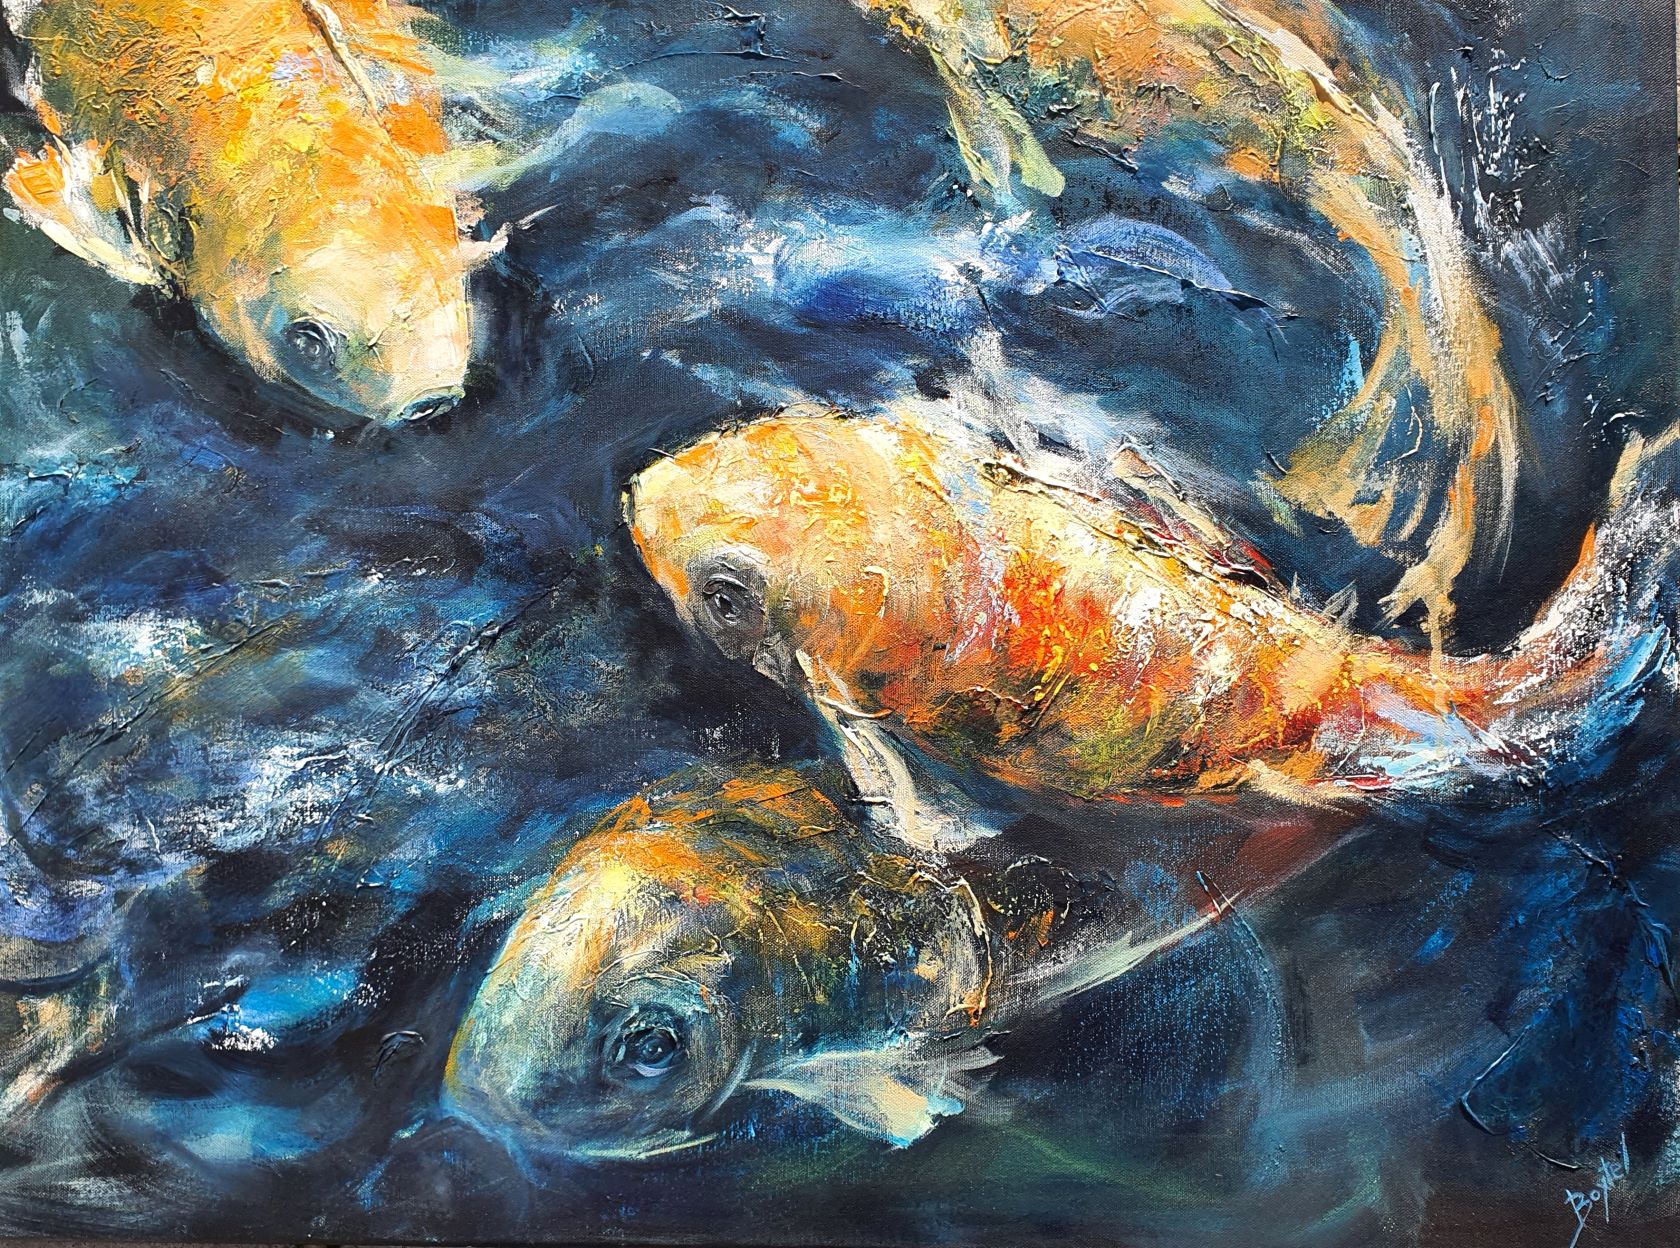 KOI fish painting Vissen schilderij